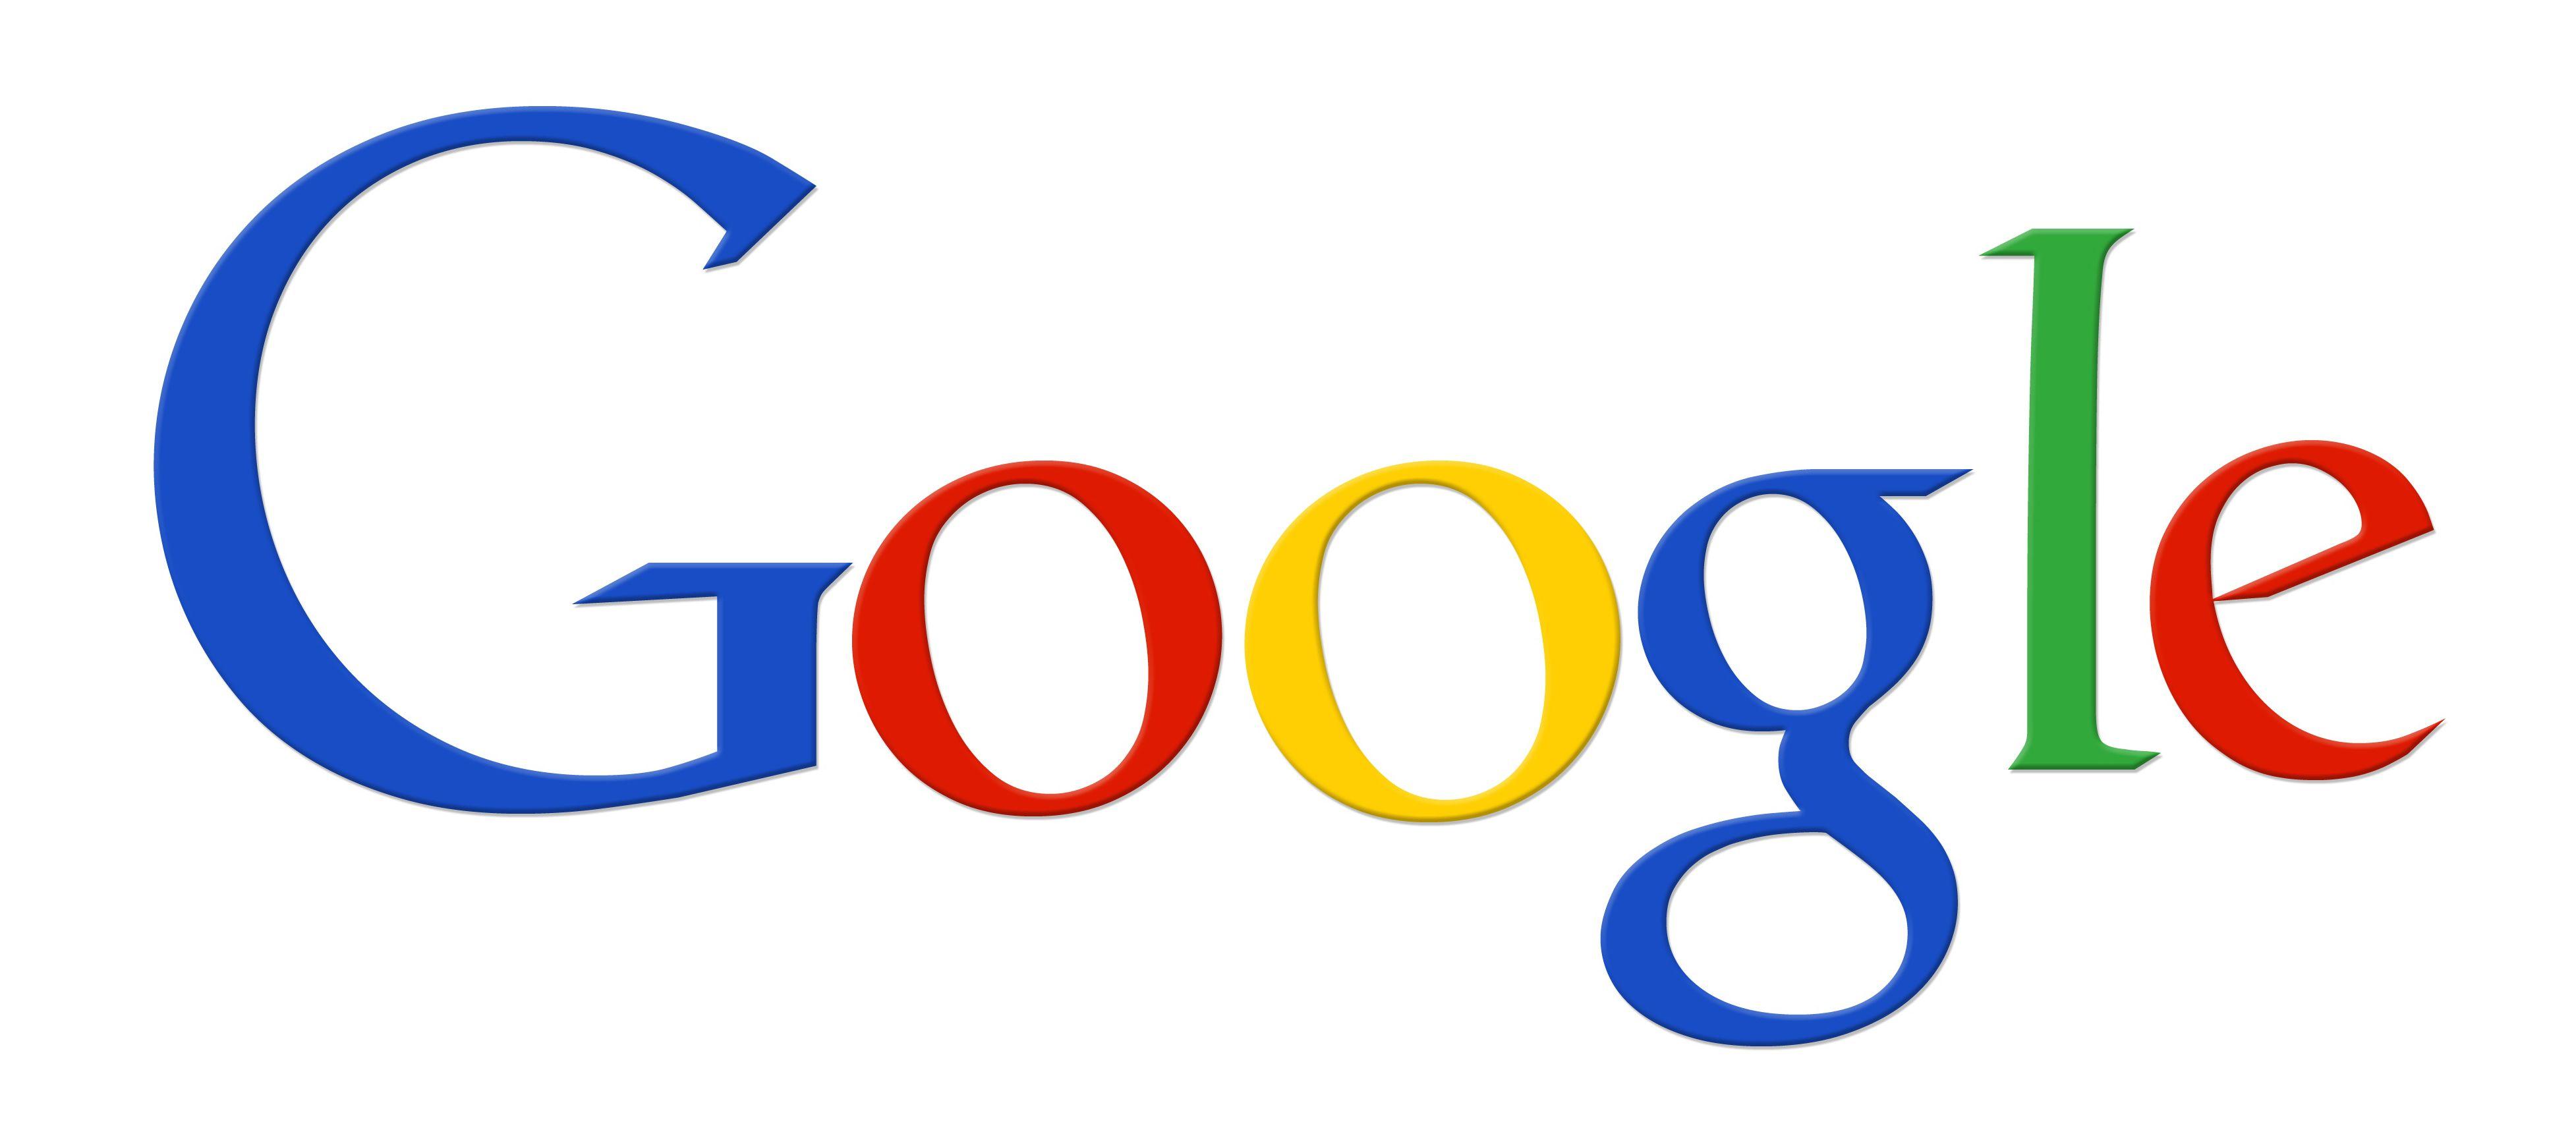 Different Google Logo - Google Logo, Google Symbol Meaning, History and Evolution